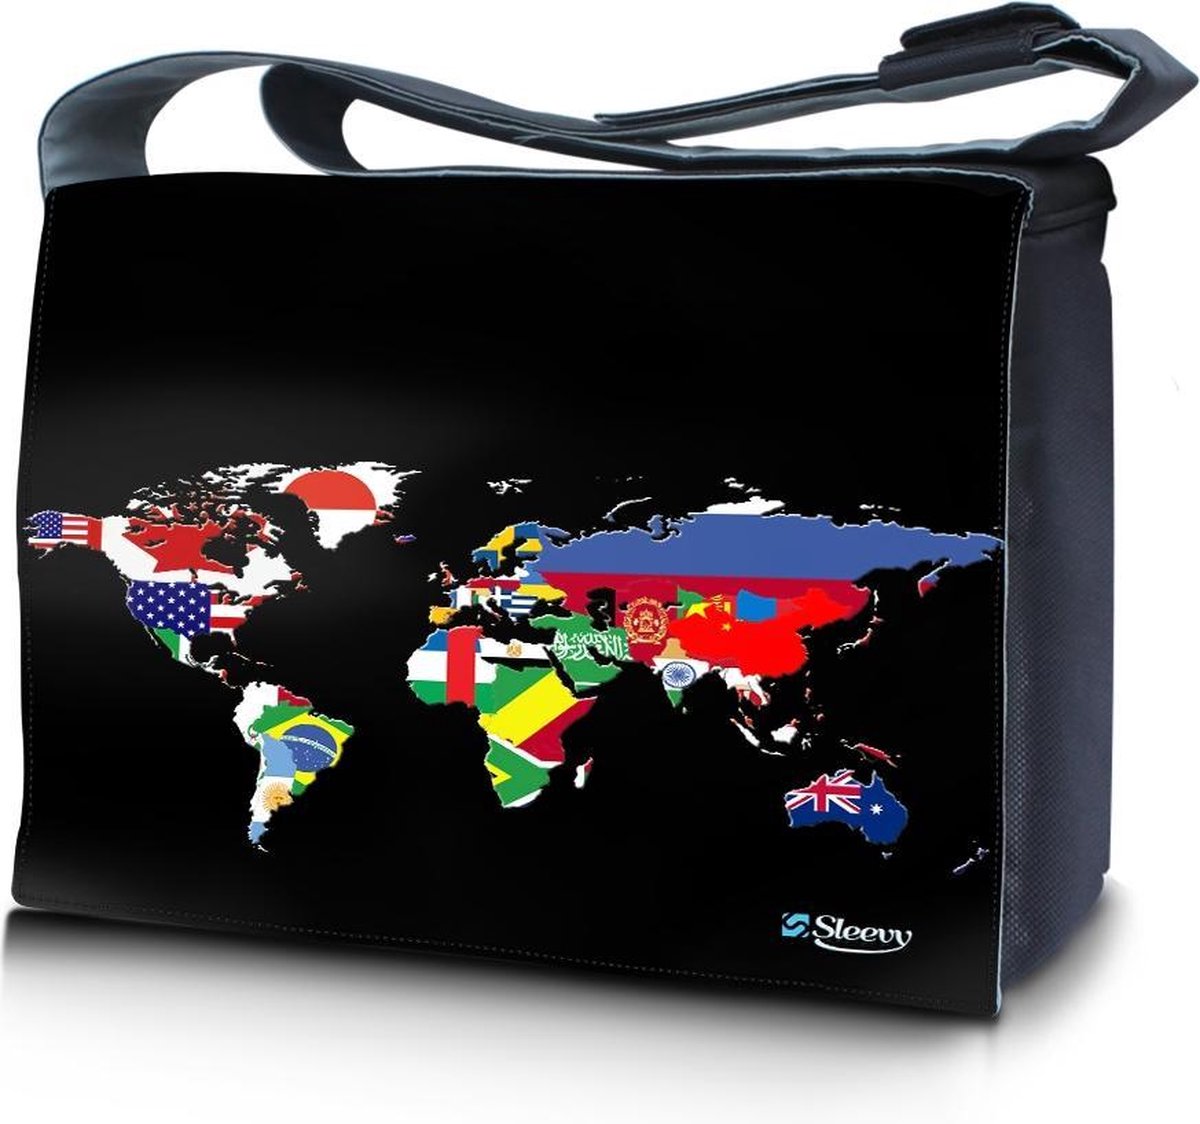 Sleevy 17,3 laptoptas / messenger tas wereldkaart en vlaggen - laptoptas - schooltas